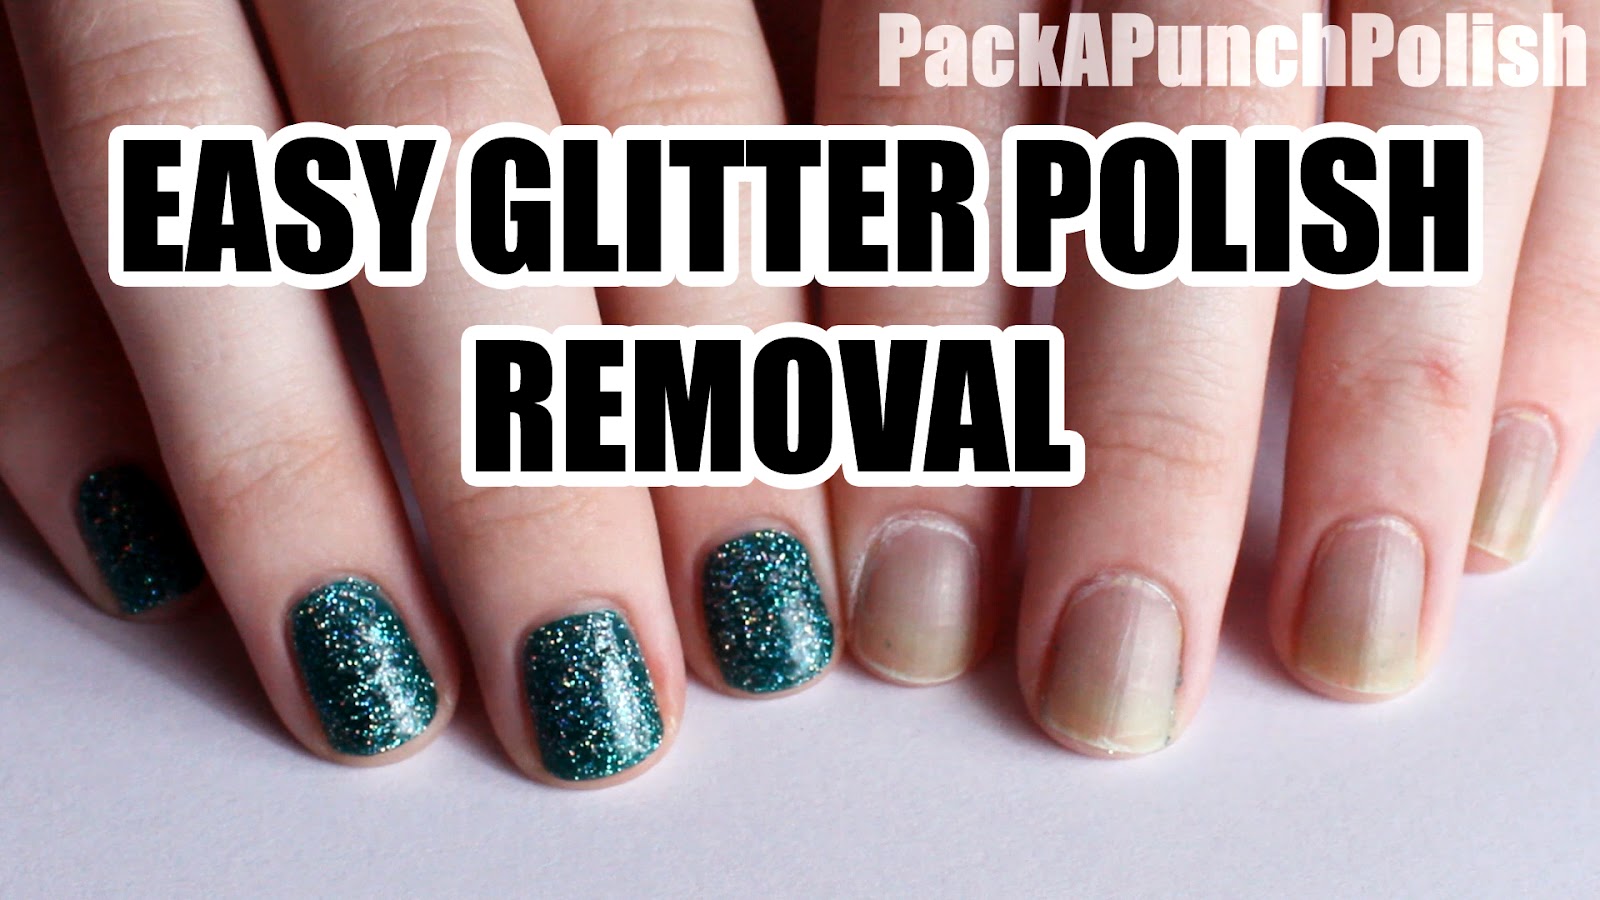 PackAPunchPolish: Glitter Polish Removal